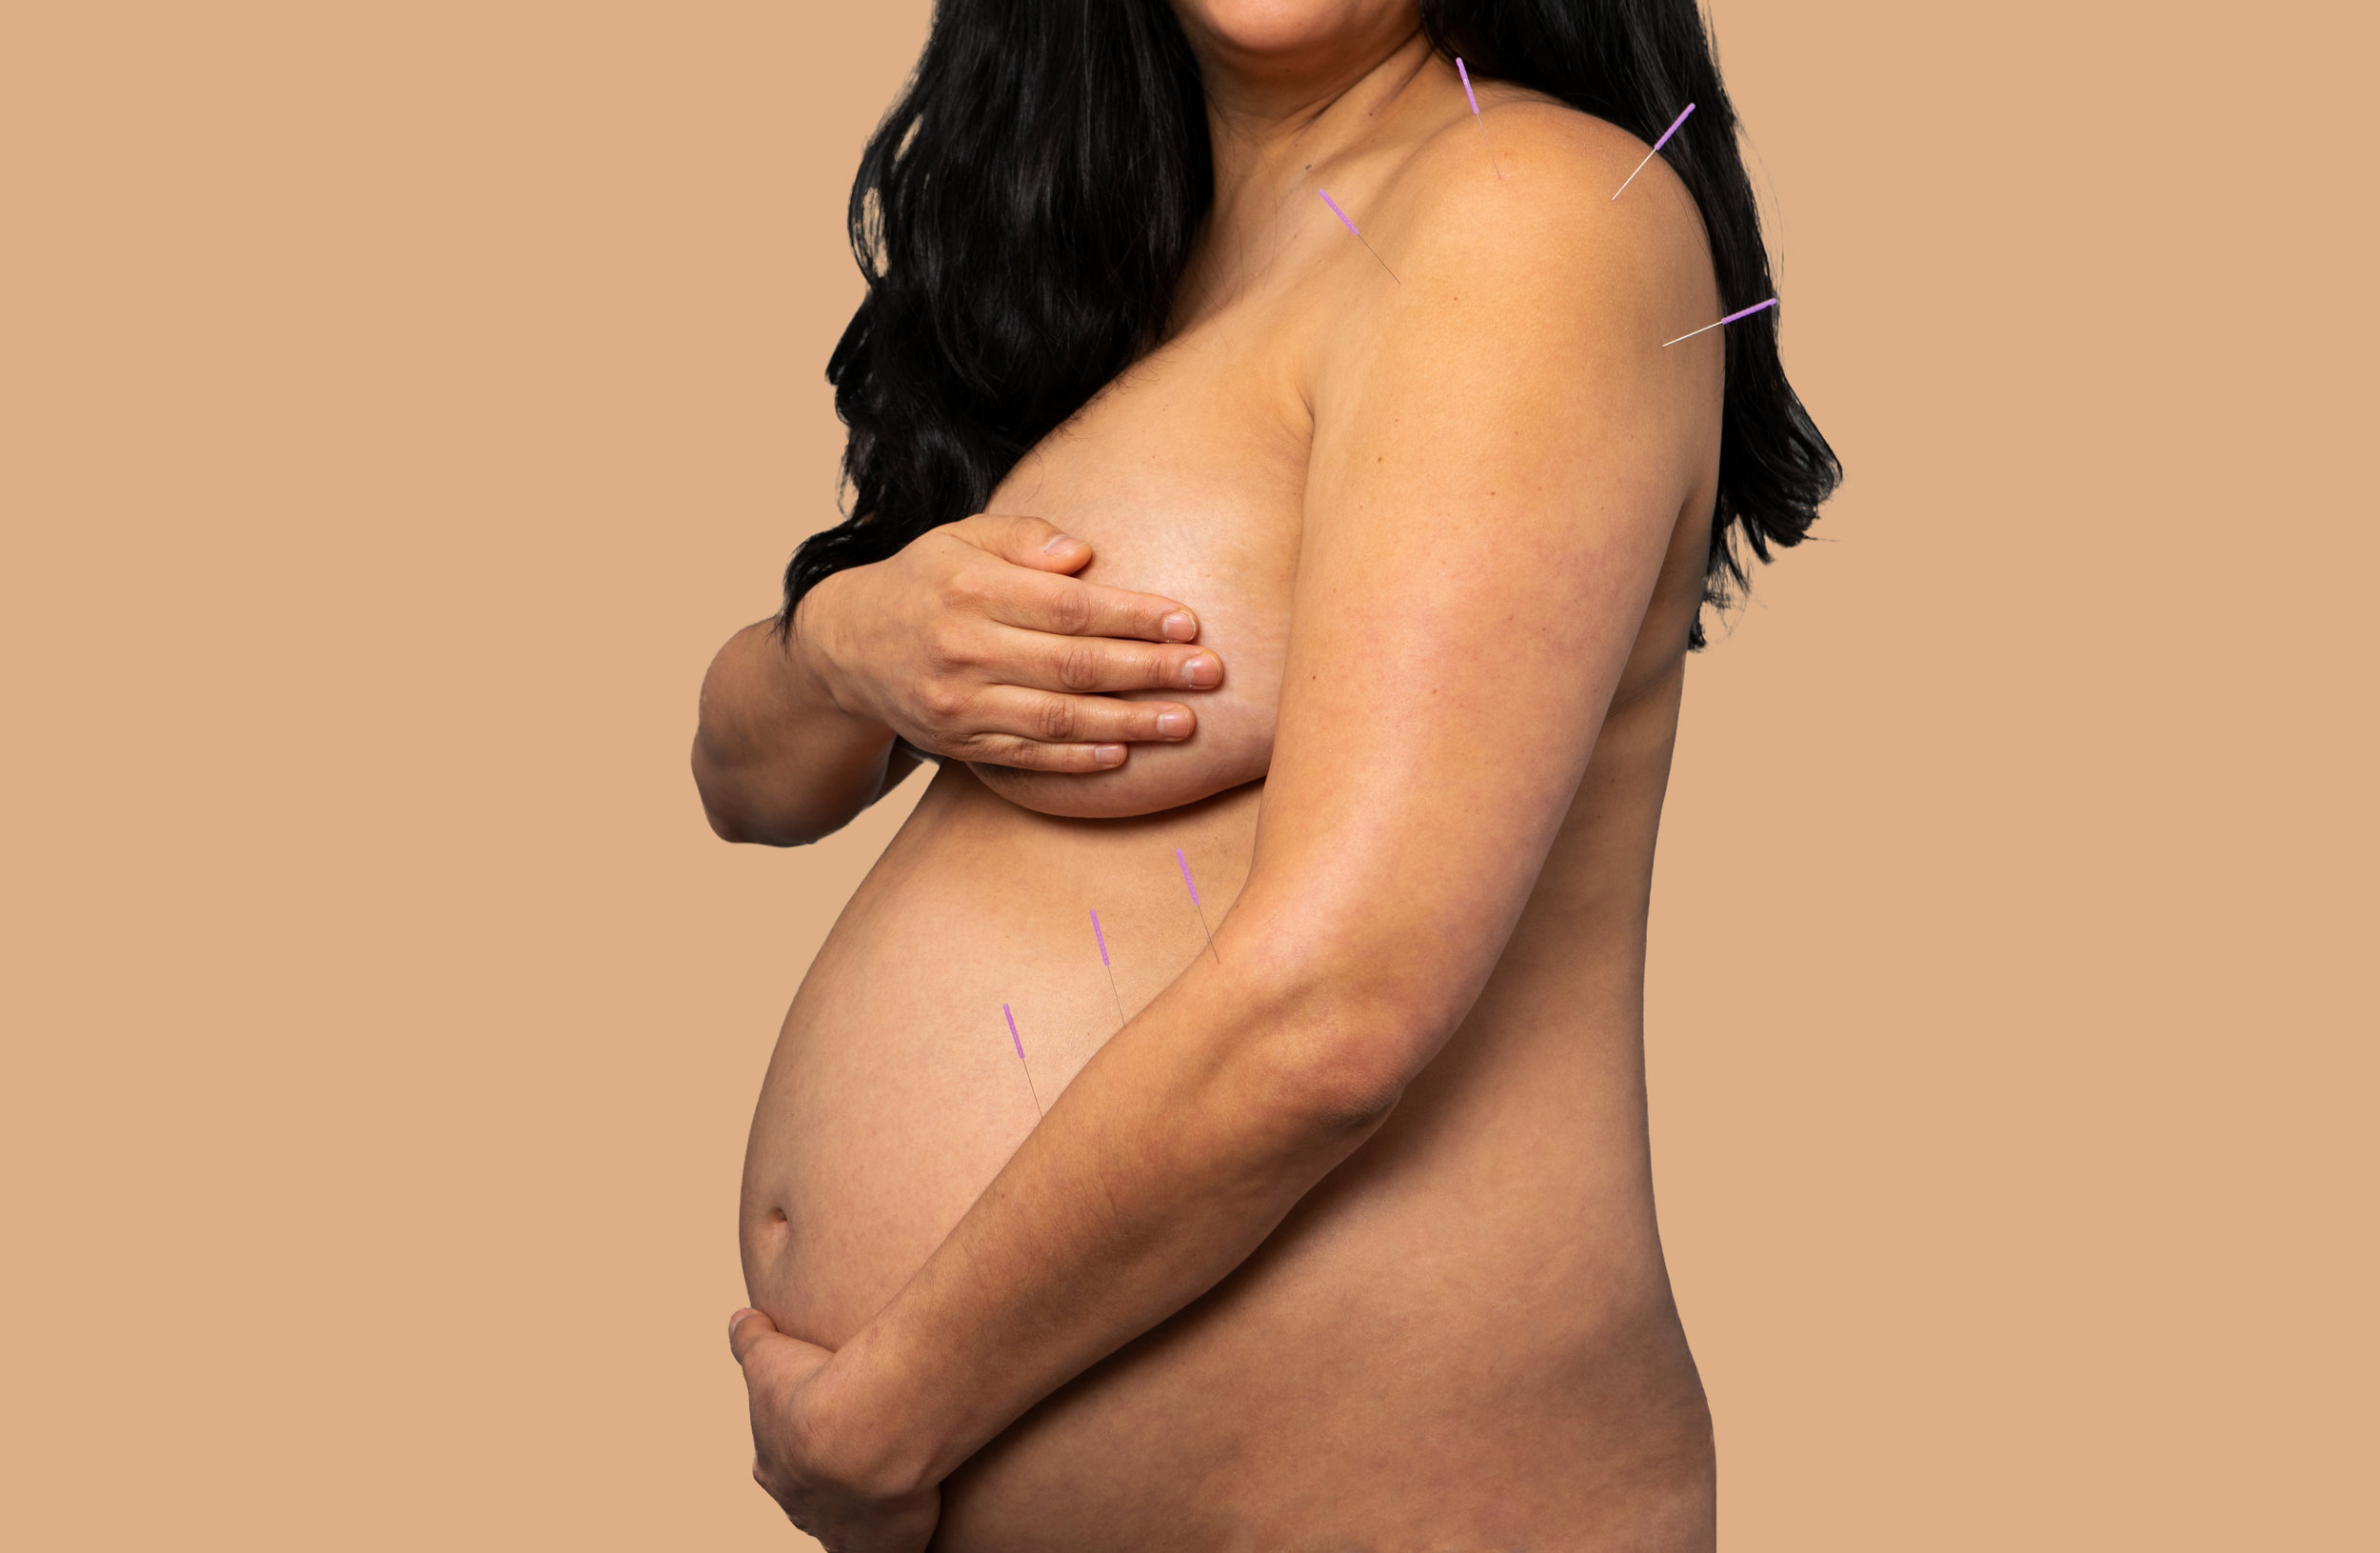 MSW pregnant needles arm.jpg